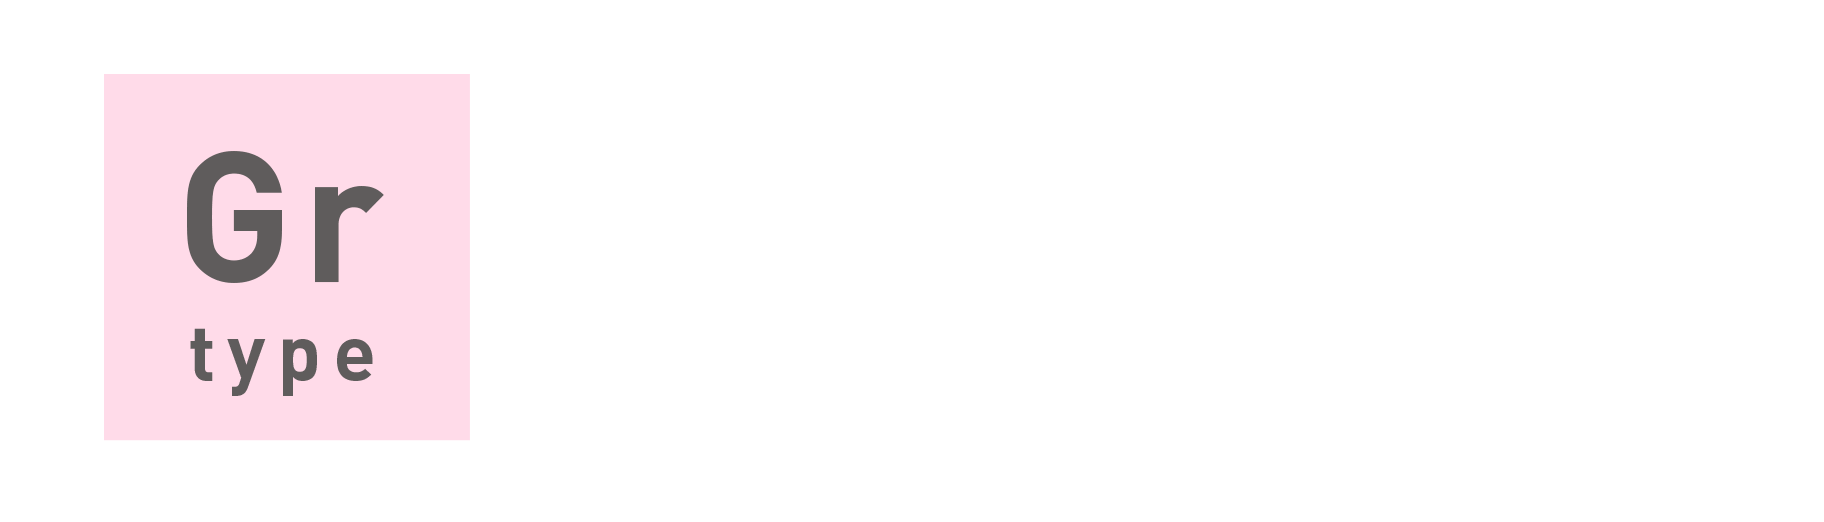 Gr-type｜4LDK+WIC+SIC 専有面積88.29㎡（約26.70坪）